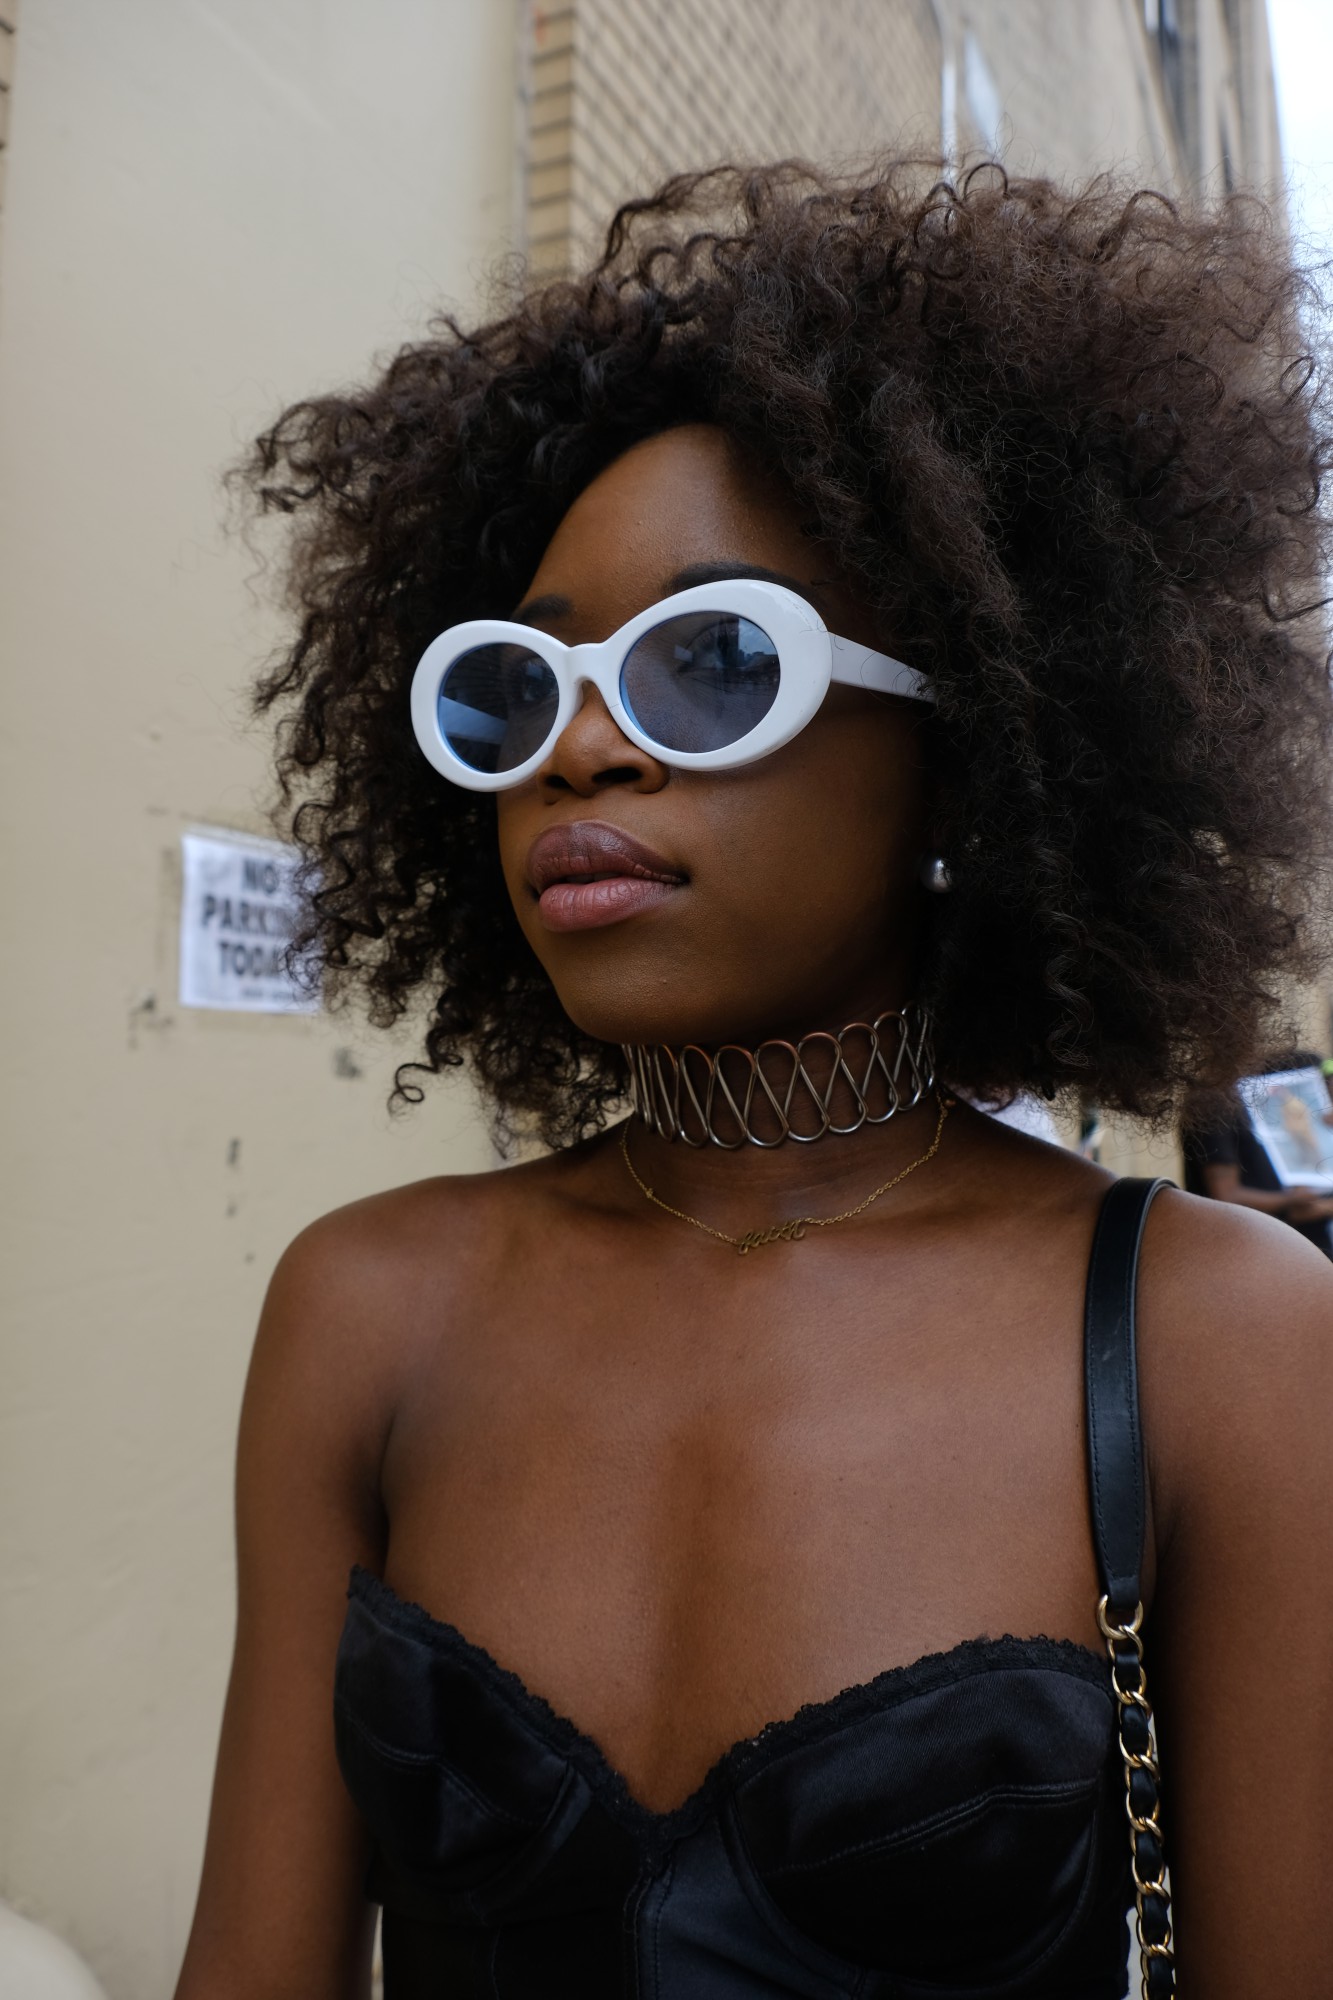 African American fashionista in sunglasses